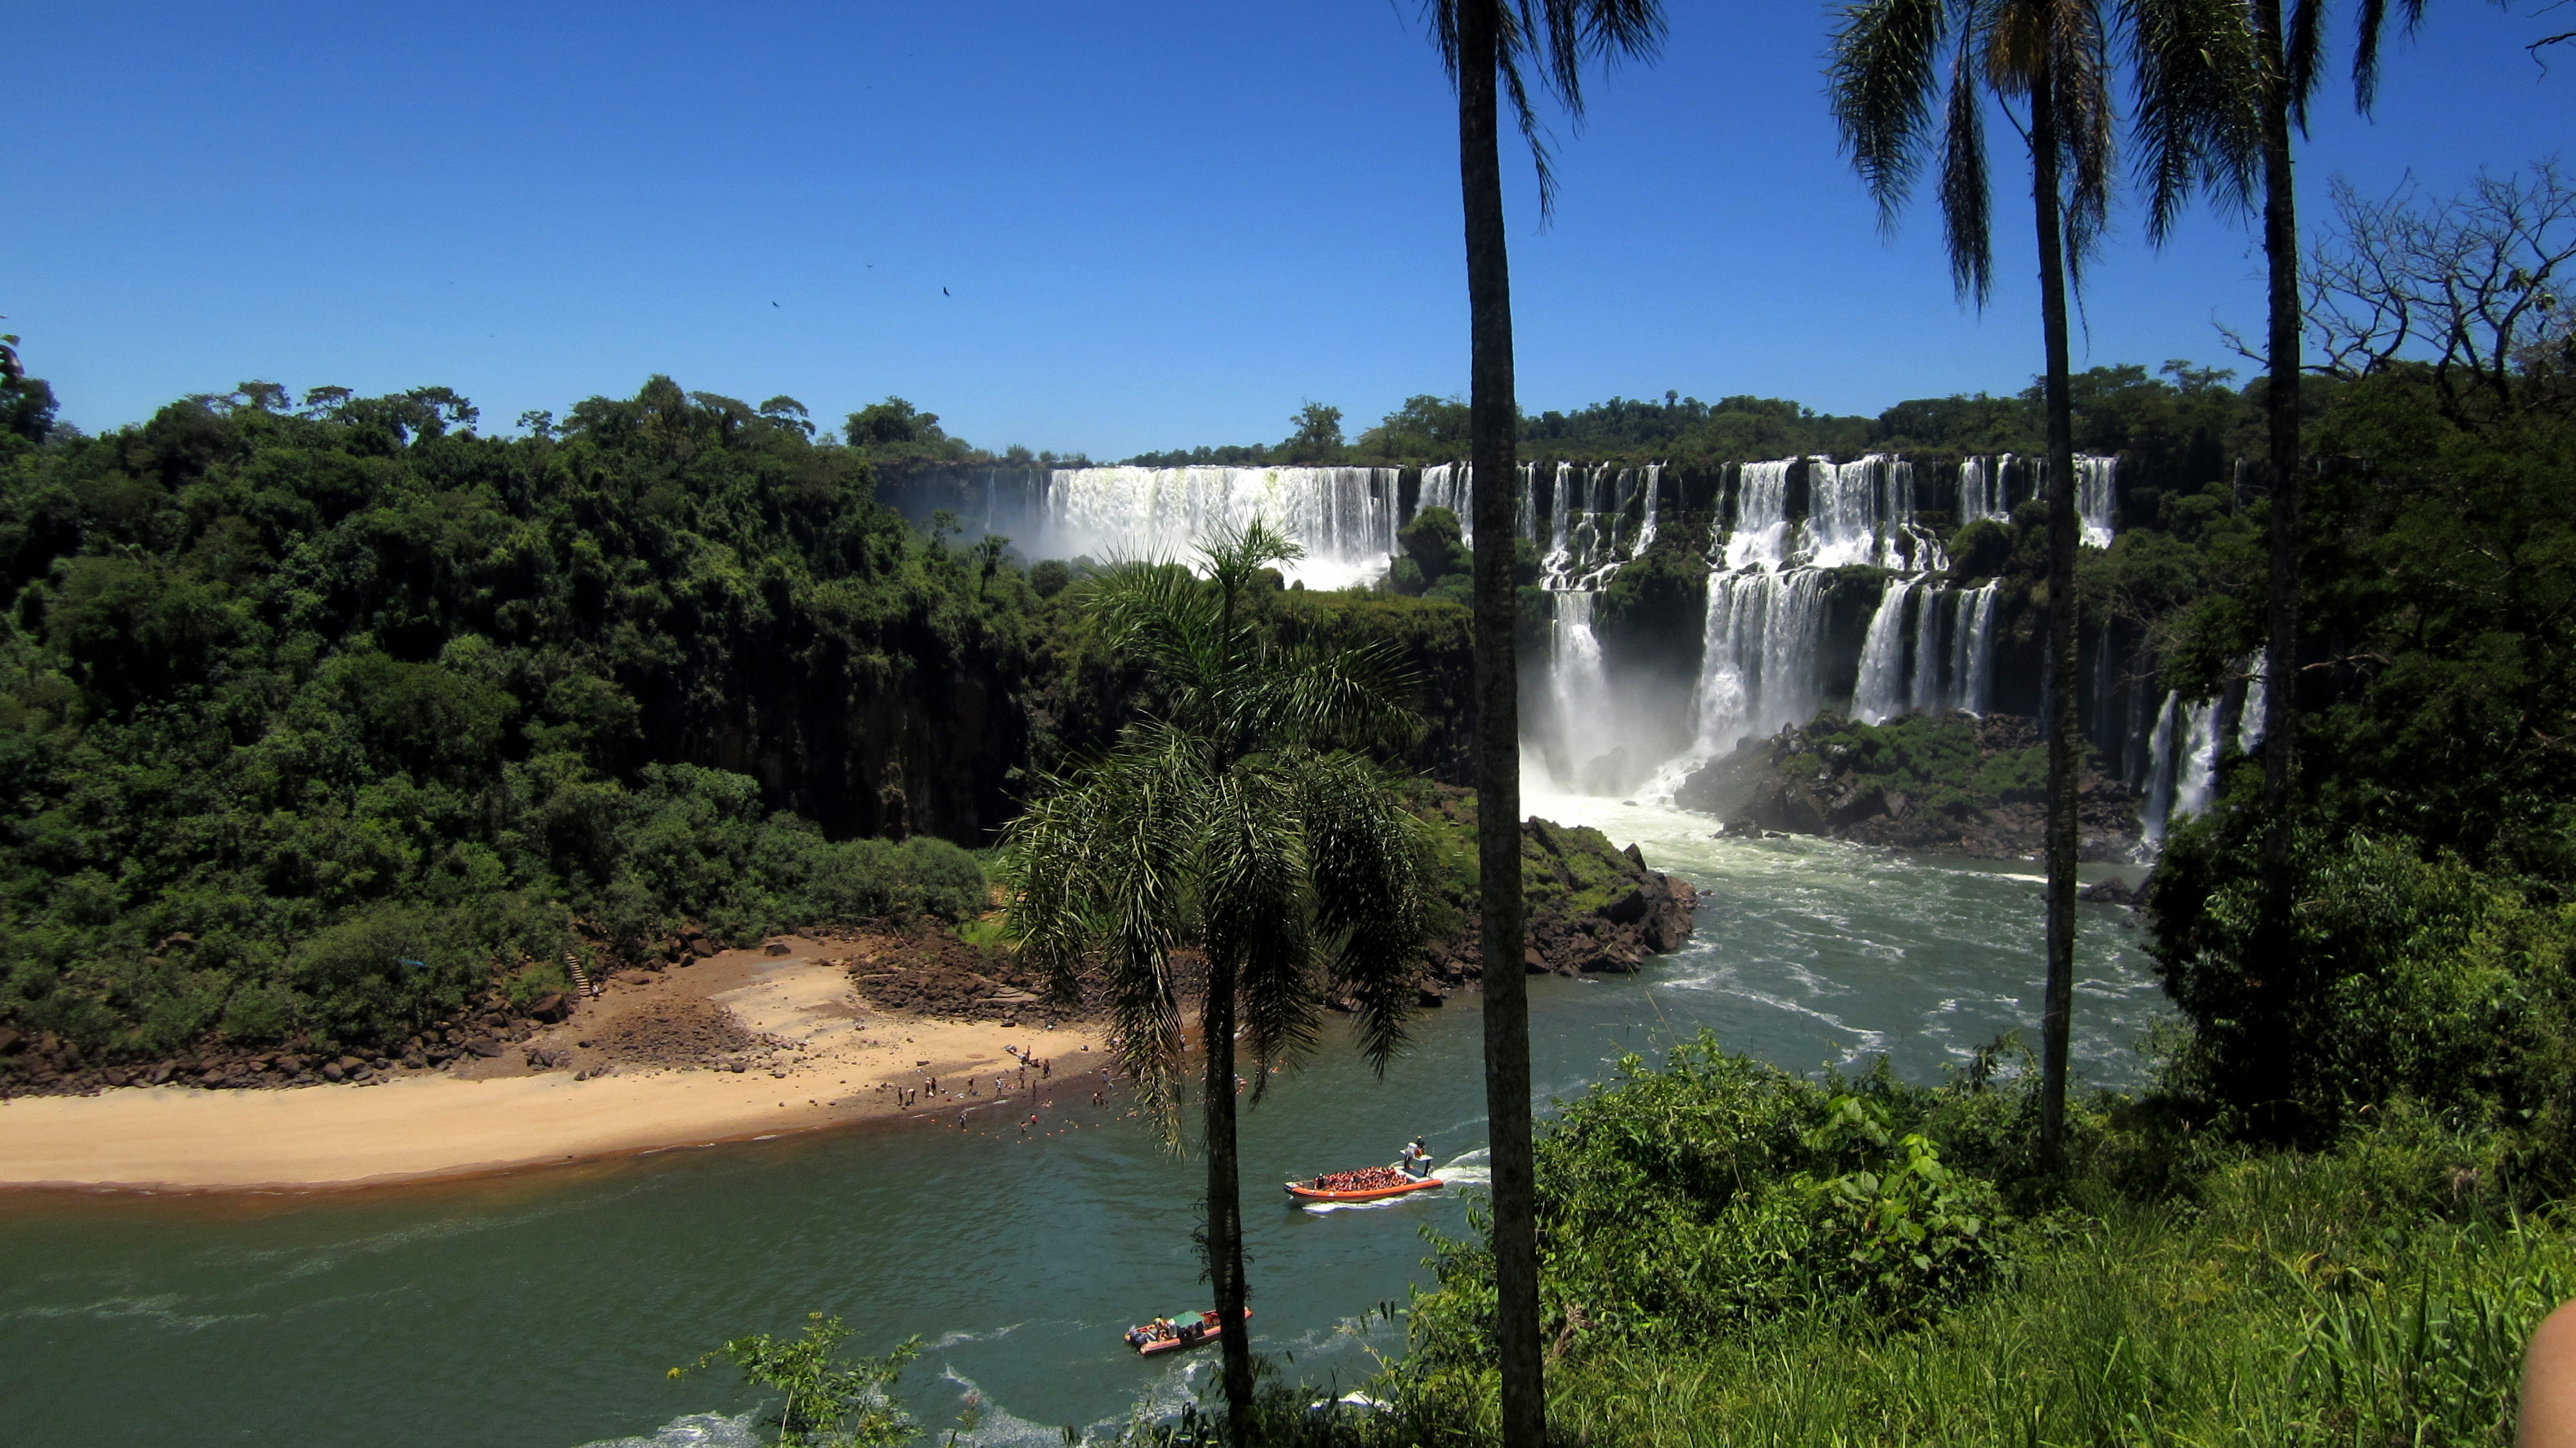 Iguazu Falls from a distance